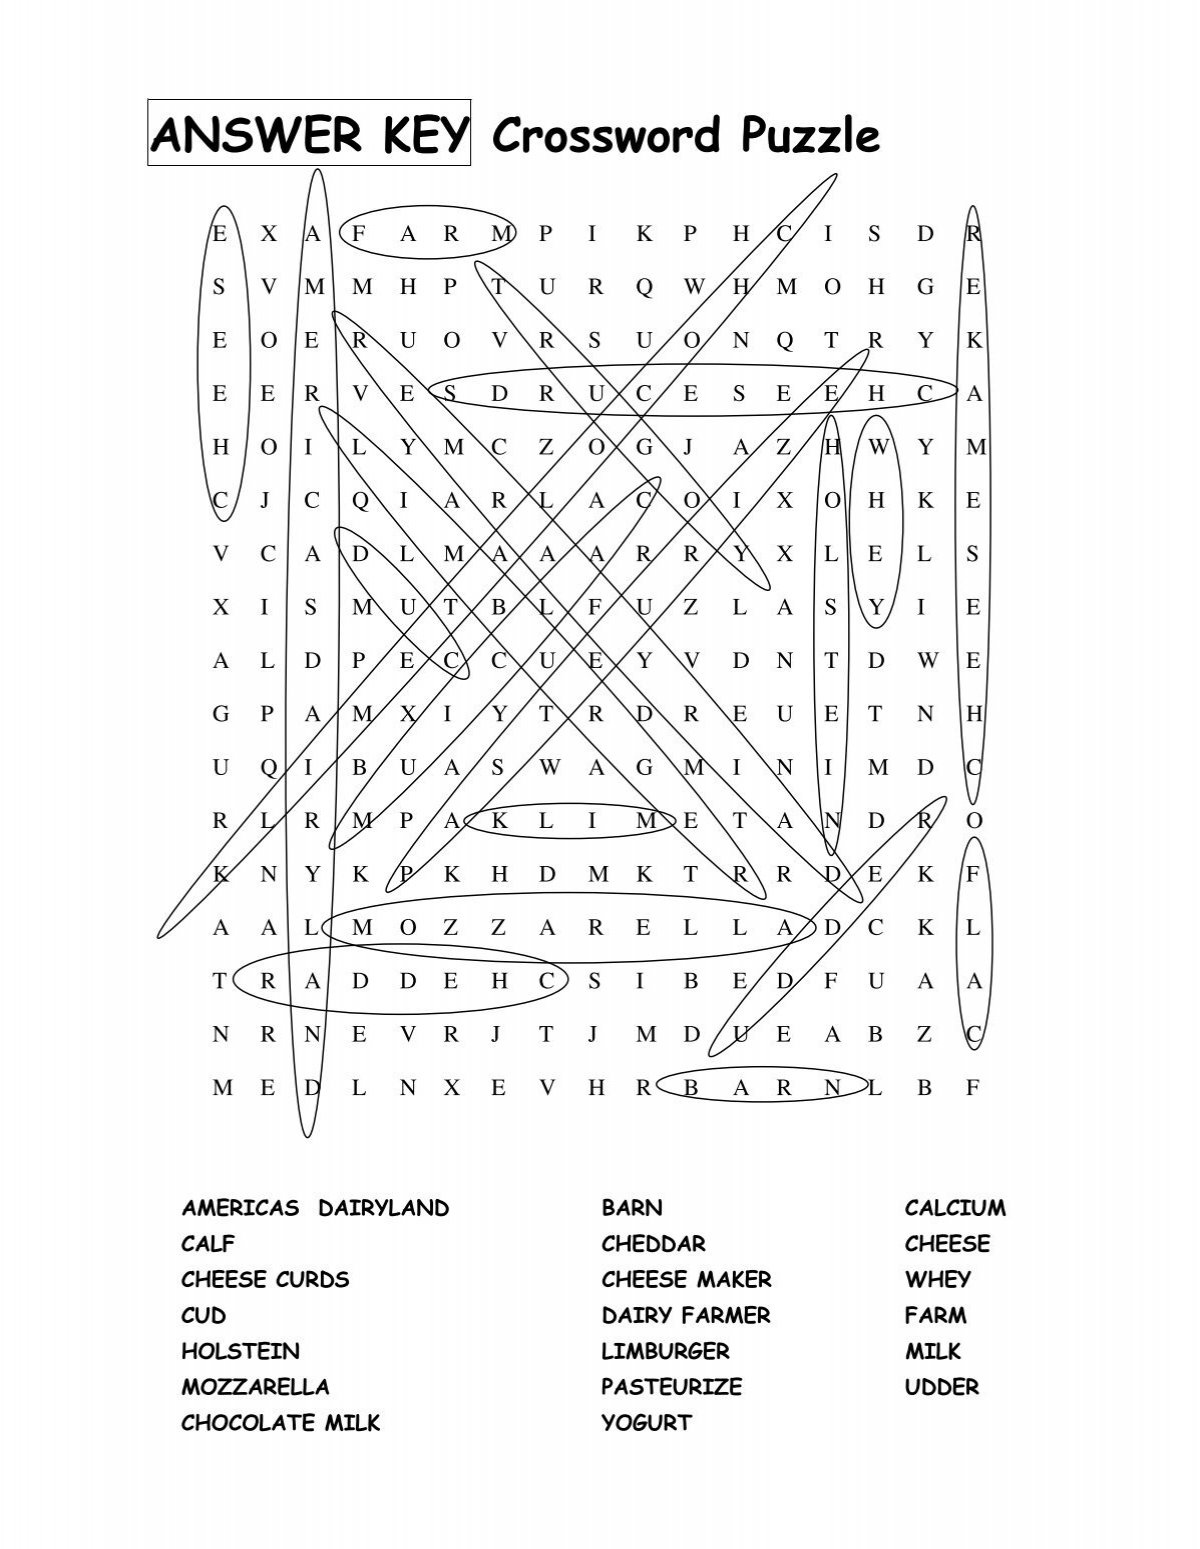 ANSWER KEY Crossword Puzzle